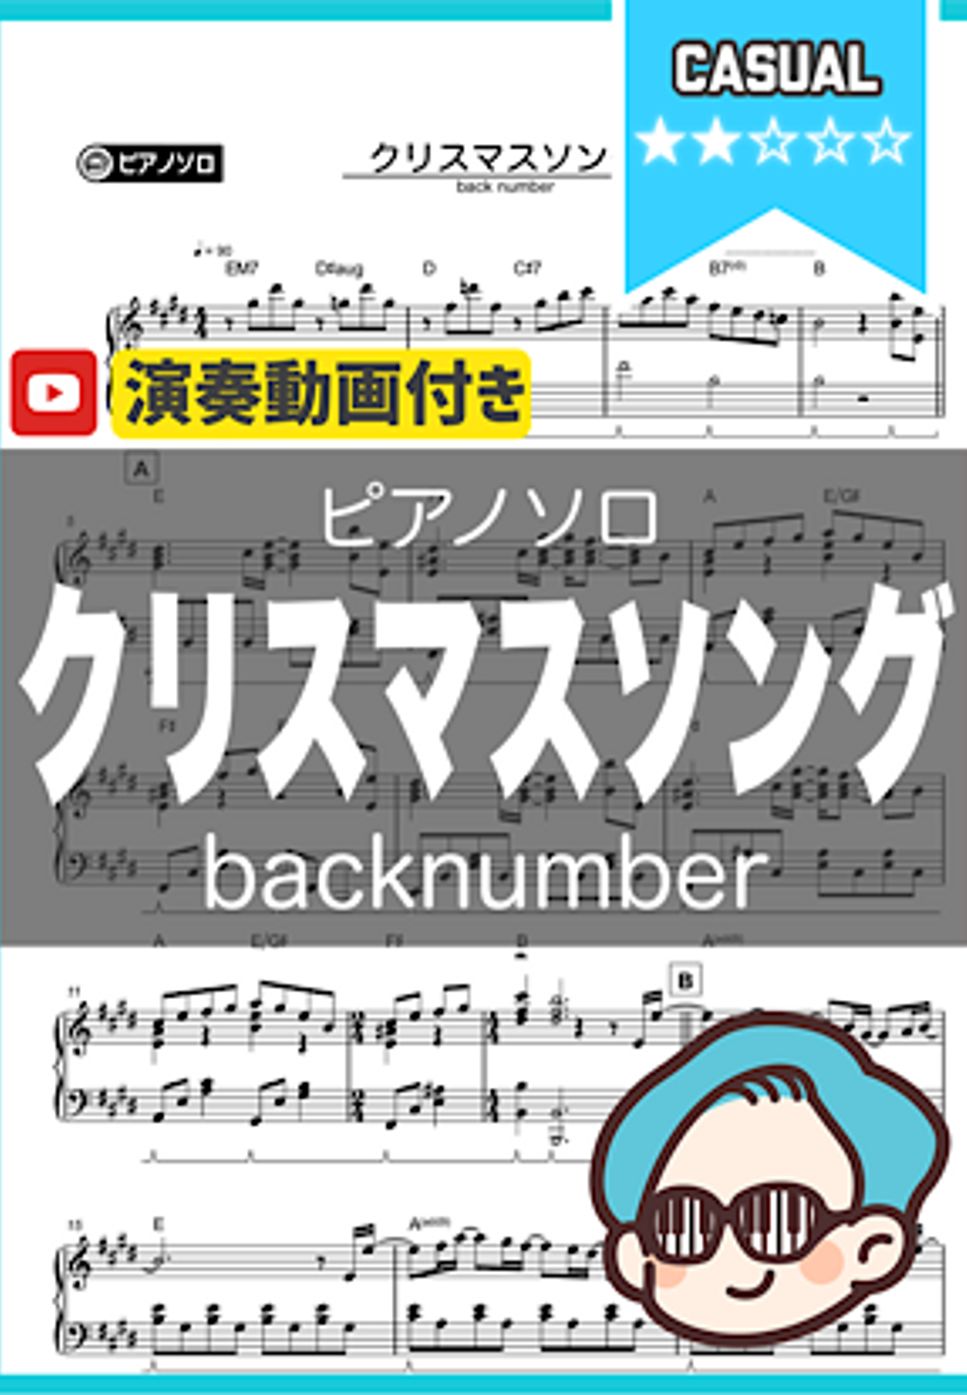 backnumber - クリスマスソング by シータピアノ